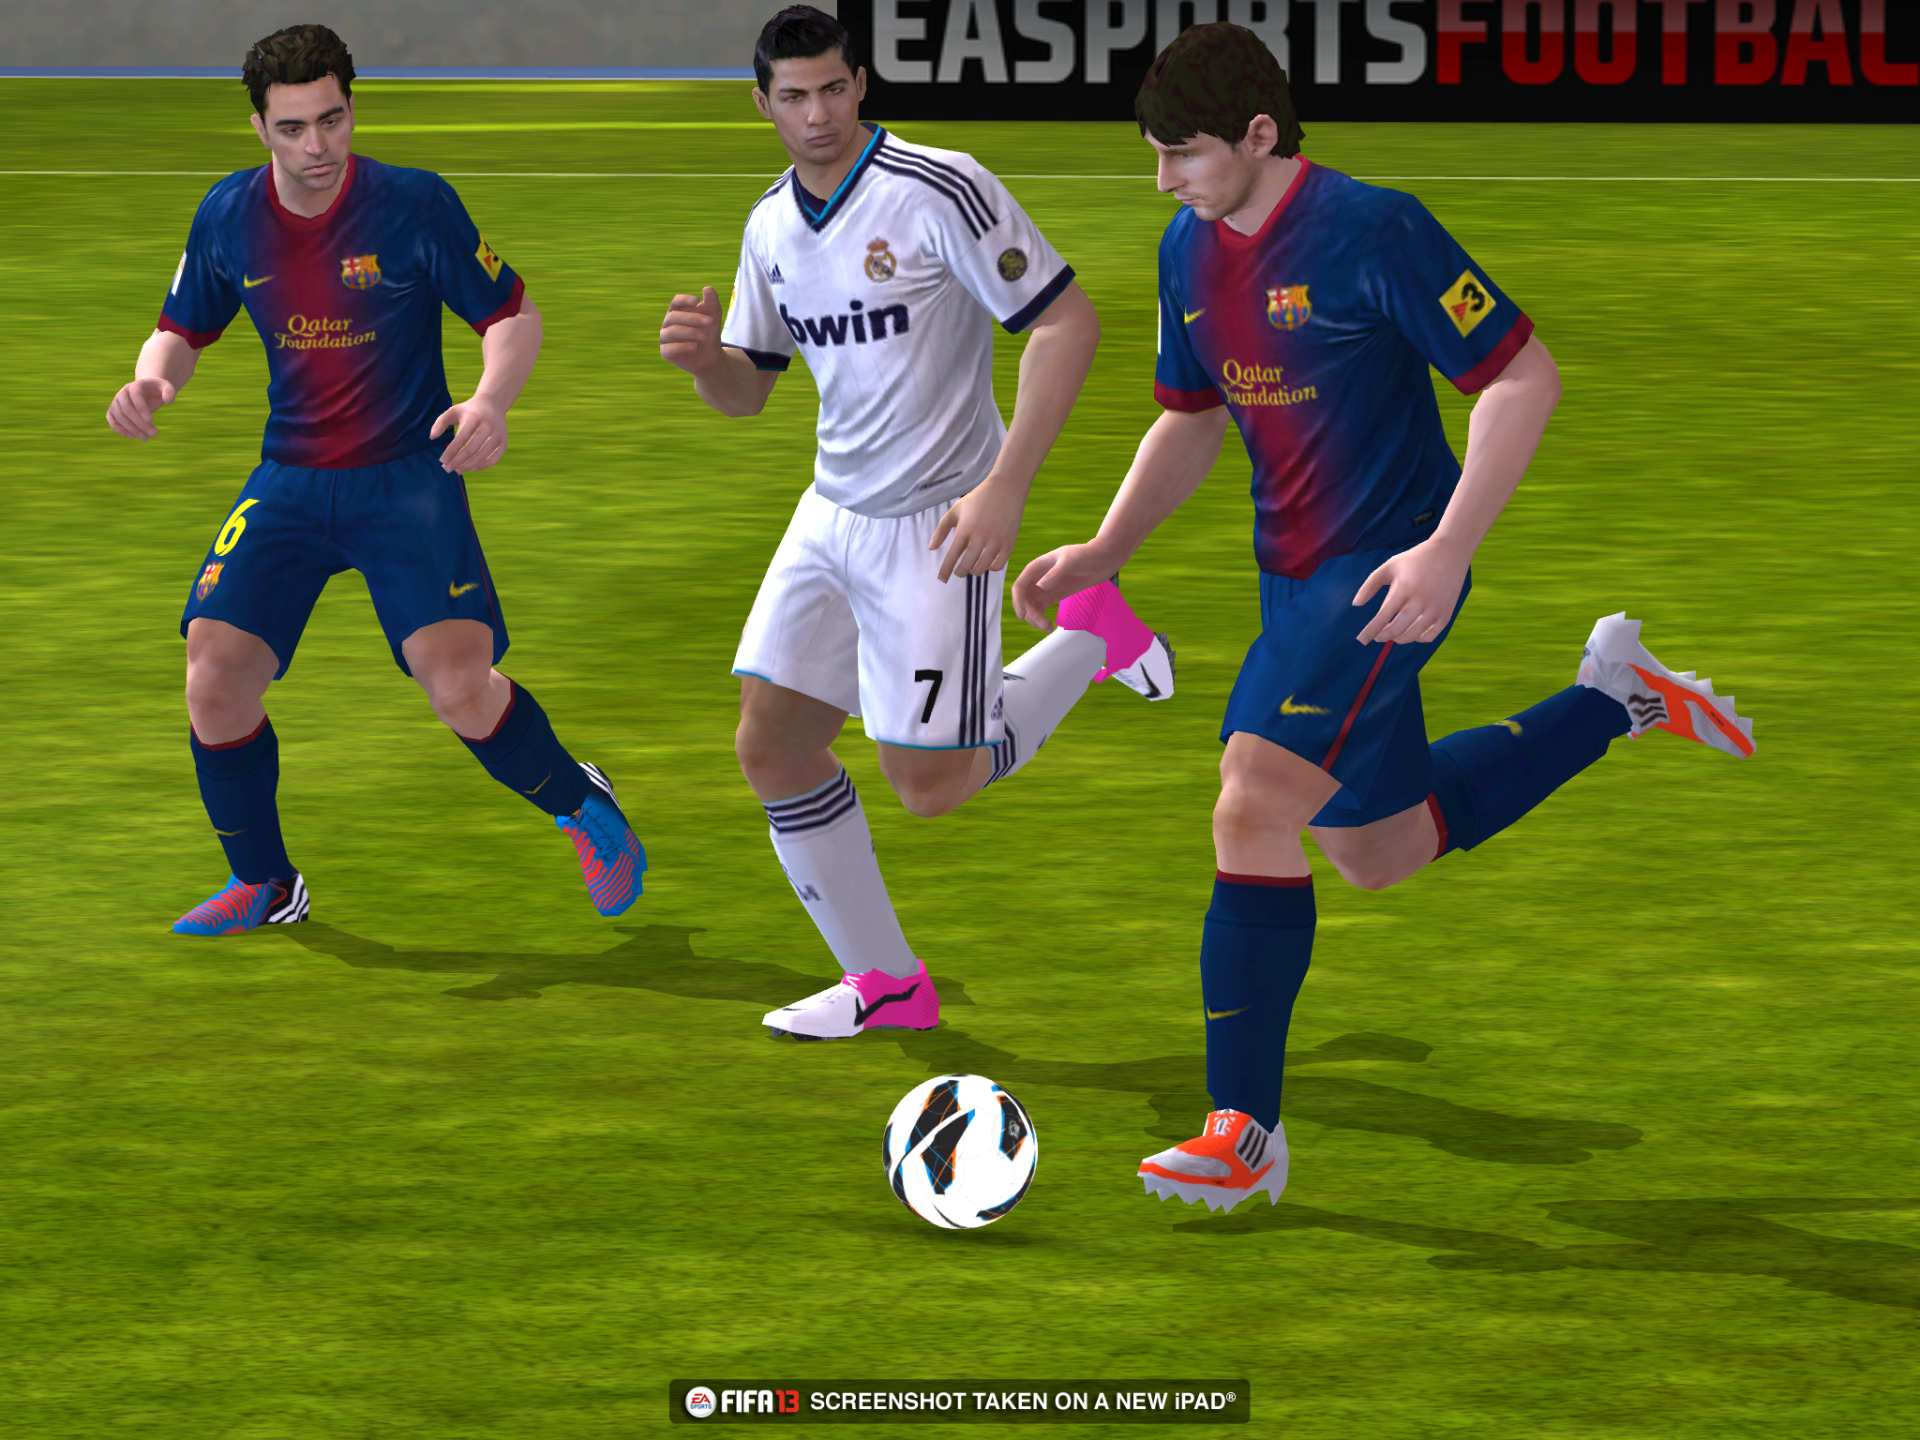 Obrázky z iOS verze FIFA 13 70828